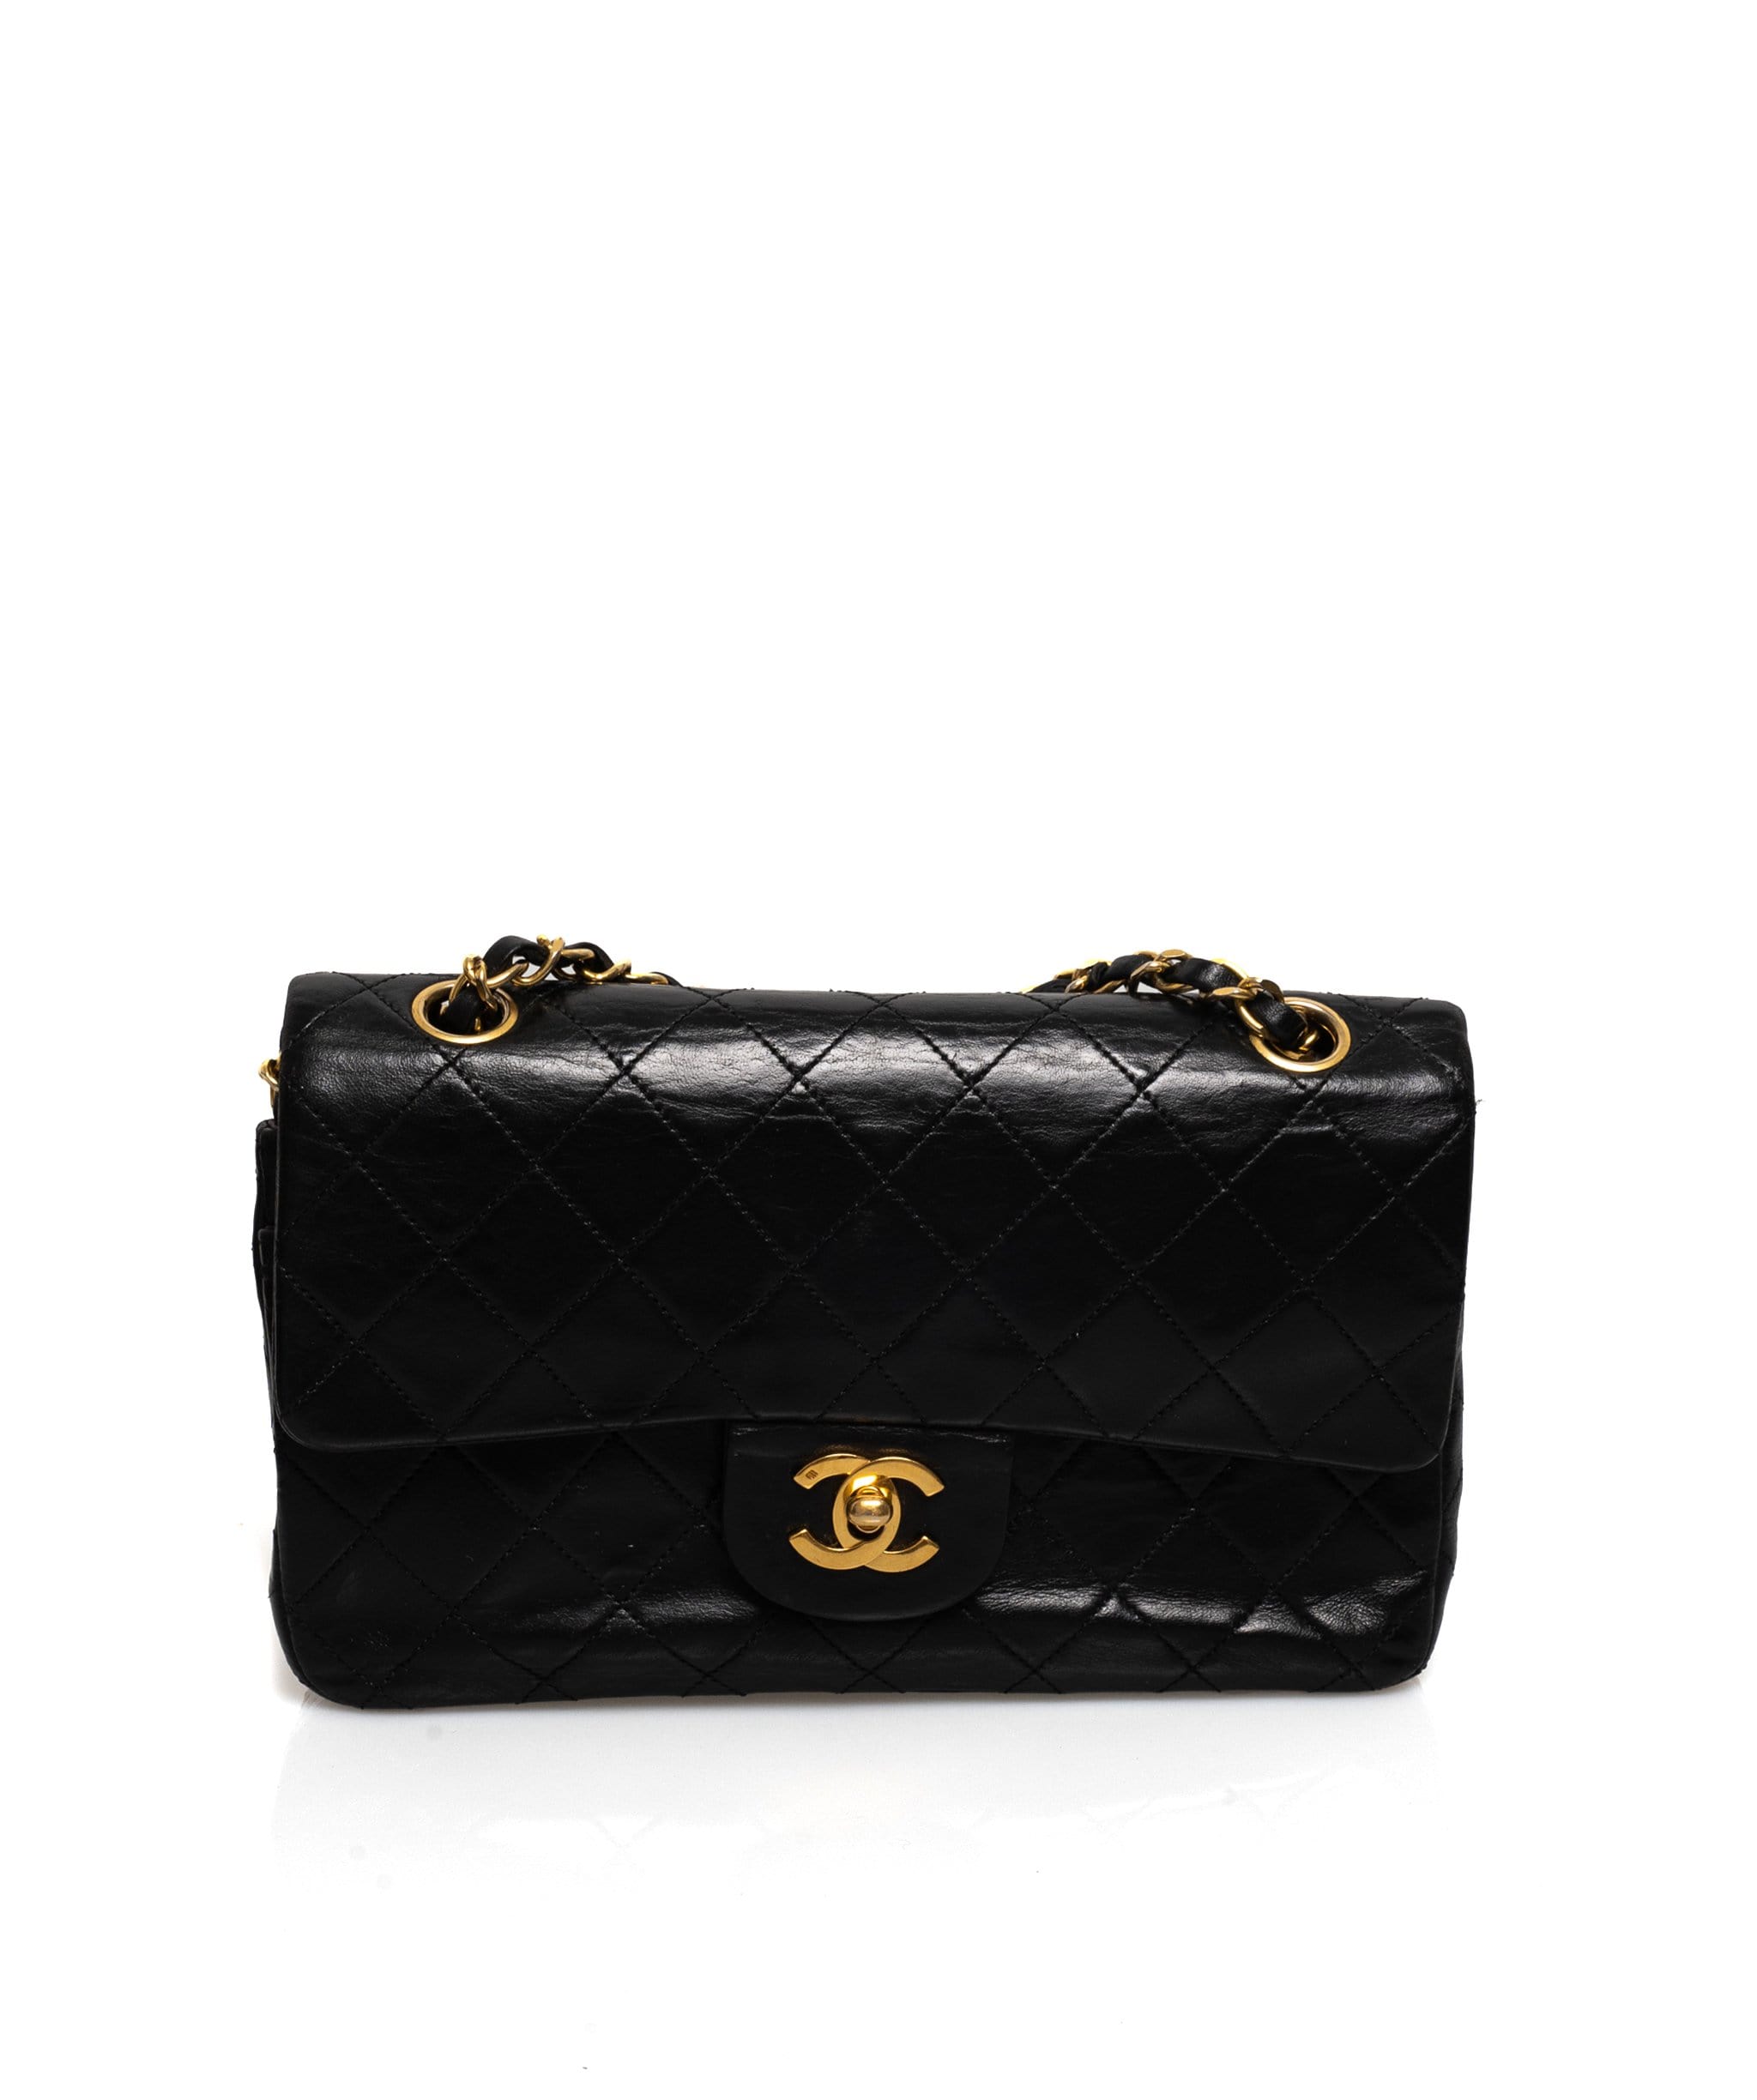 Chanel Chanel 9' Small Flap Bag Black Lambskin MW1858